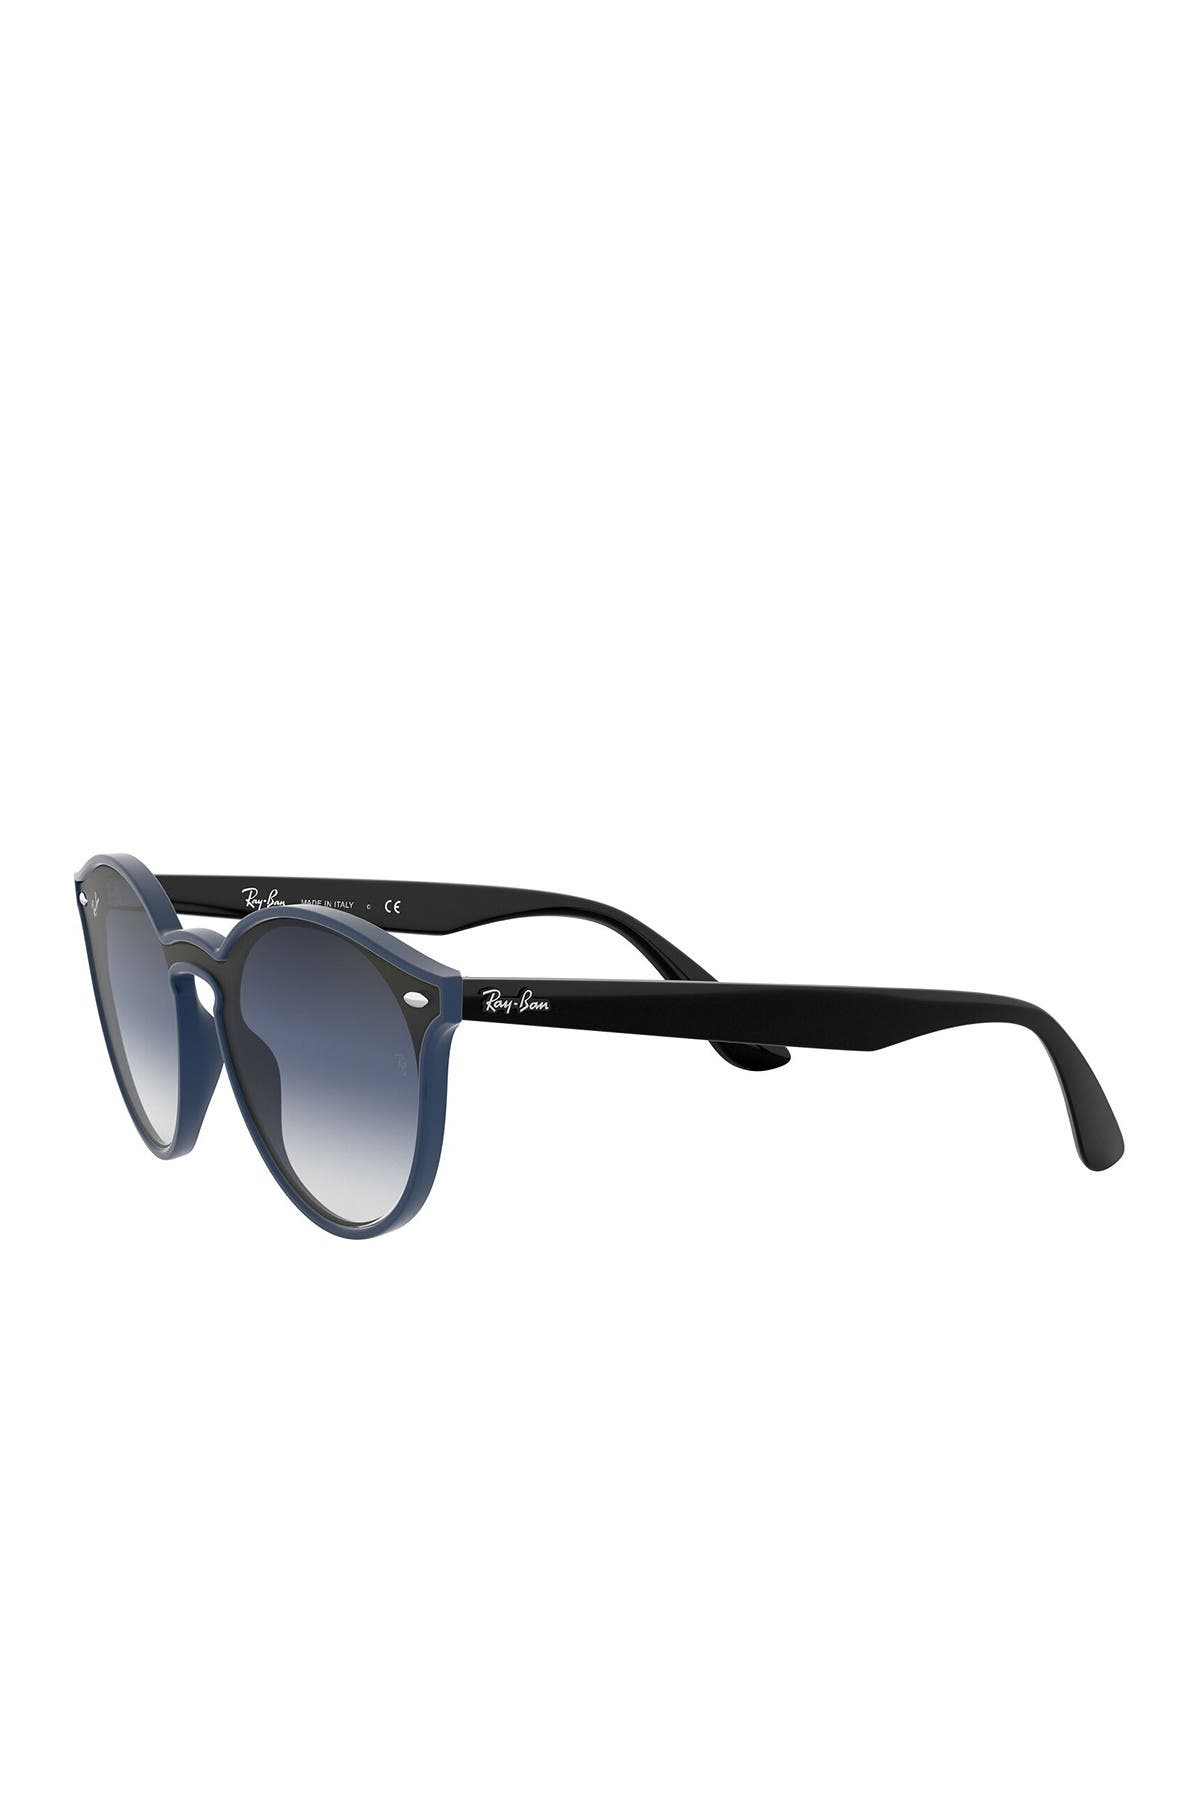 Ray Ban 39mm Phantos Sunglasses Hautelook